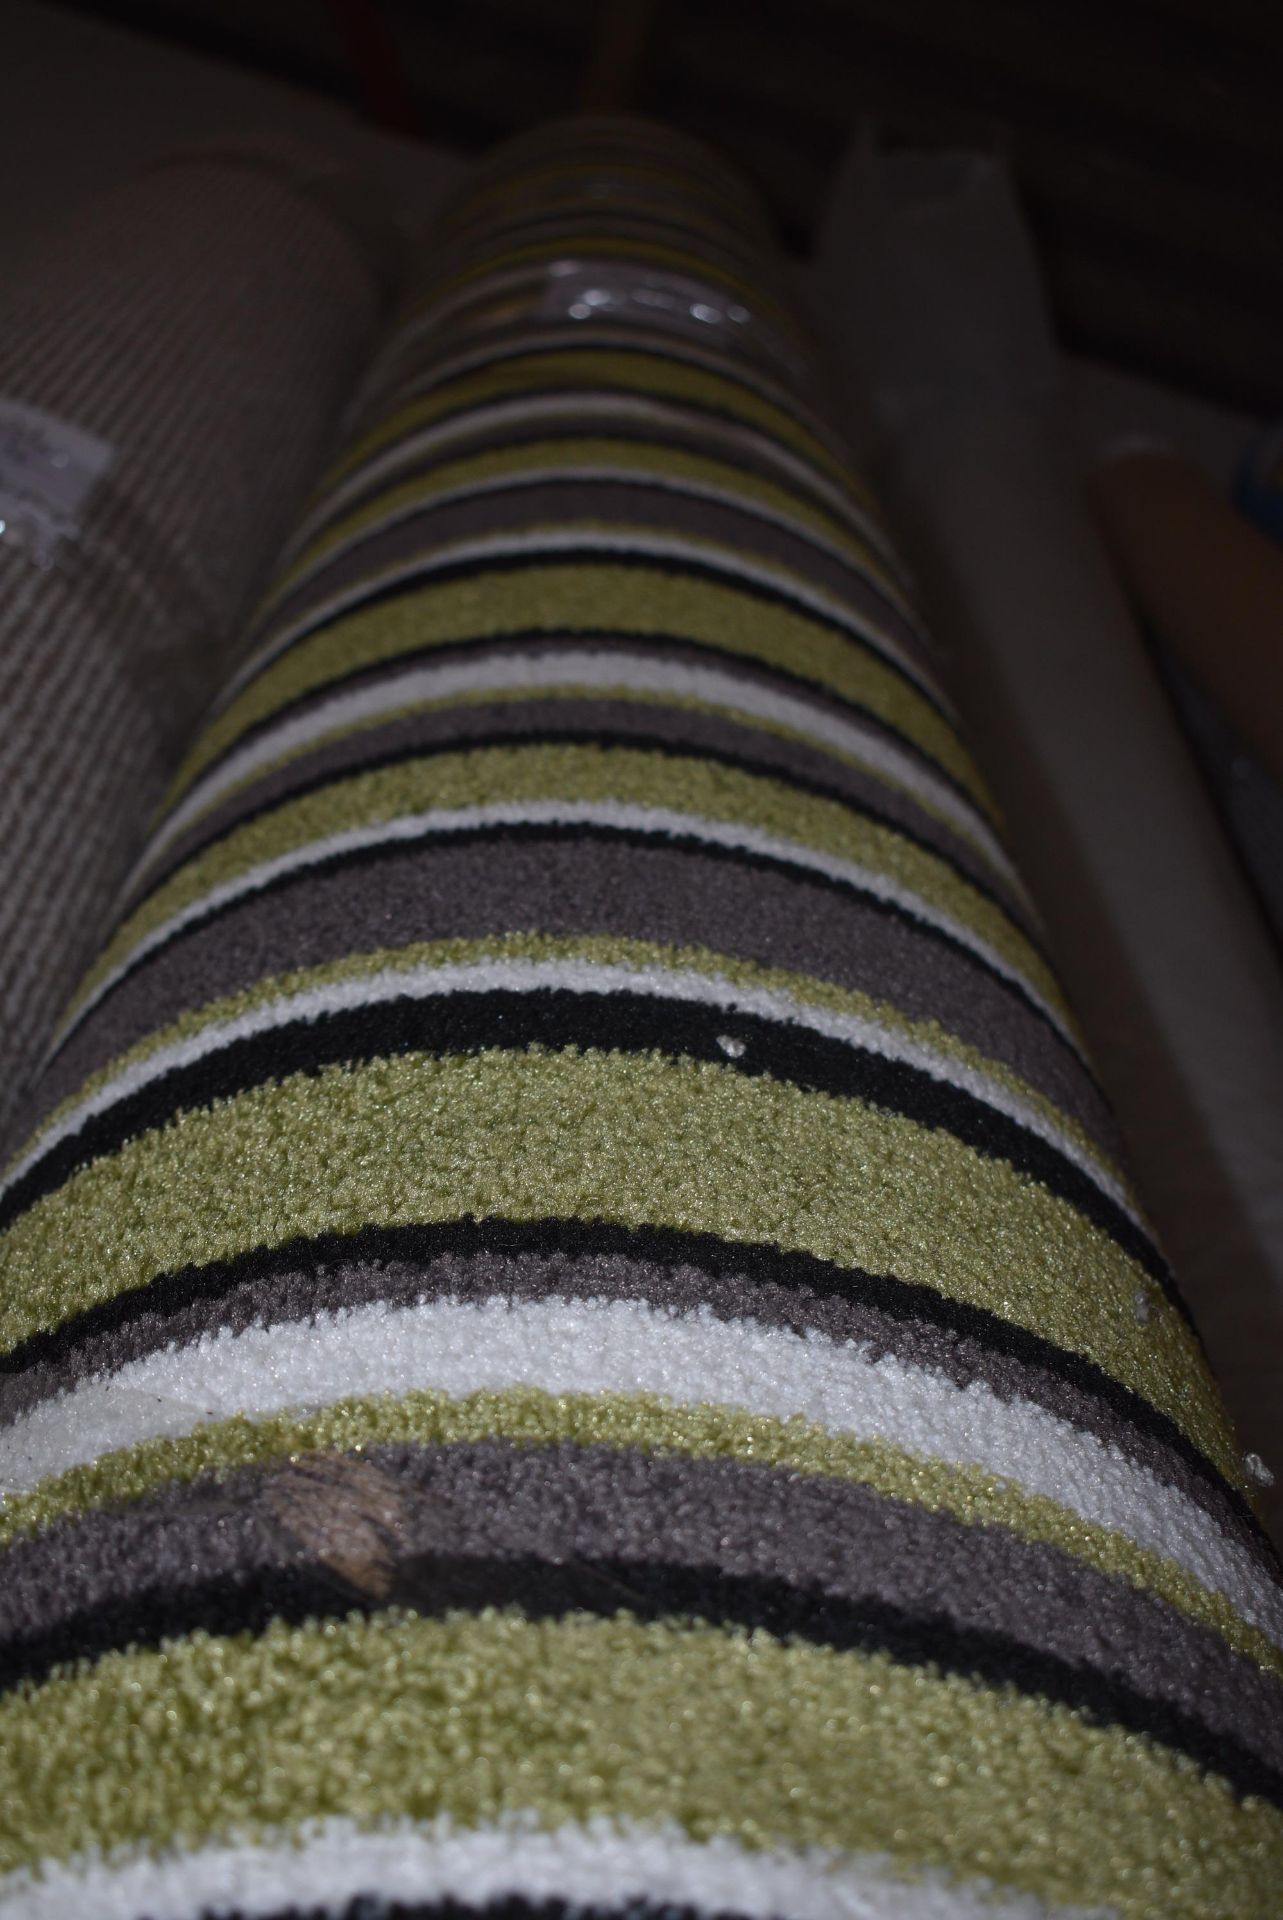 4m x 13m Roll of Cream, Grey & Black Stripe Carpet